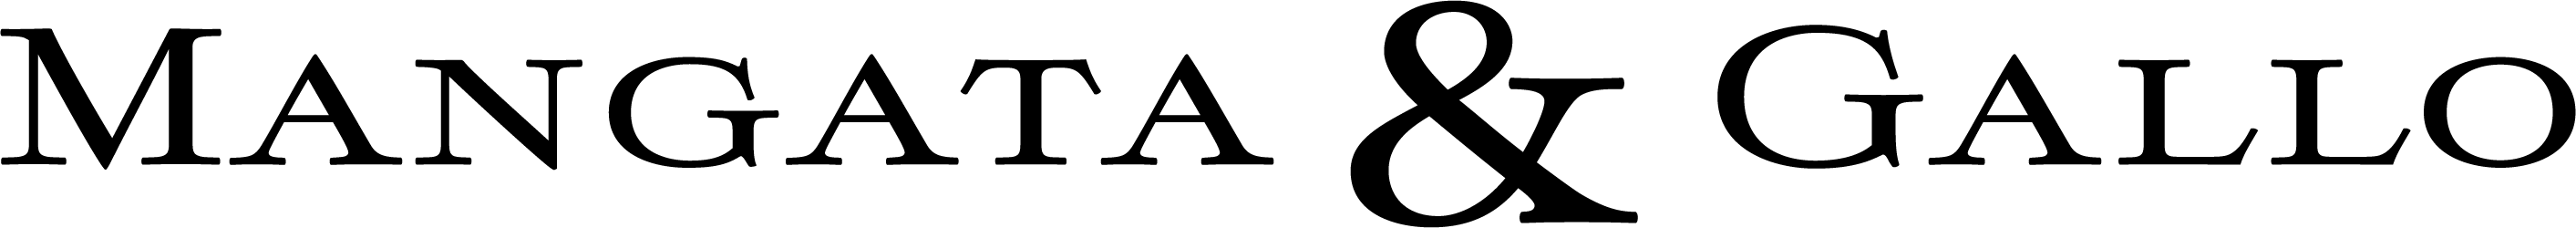 Mangata and Gallo logo